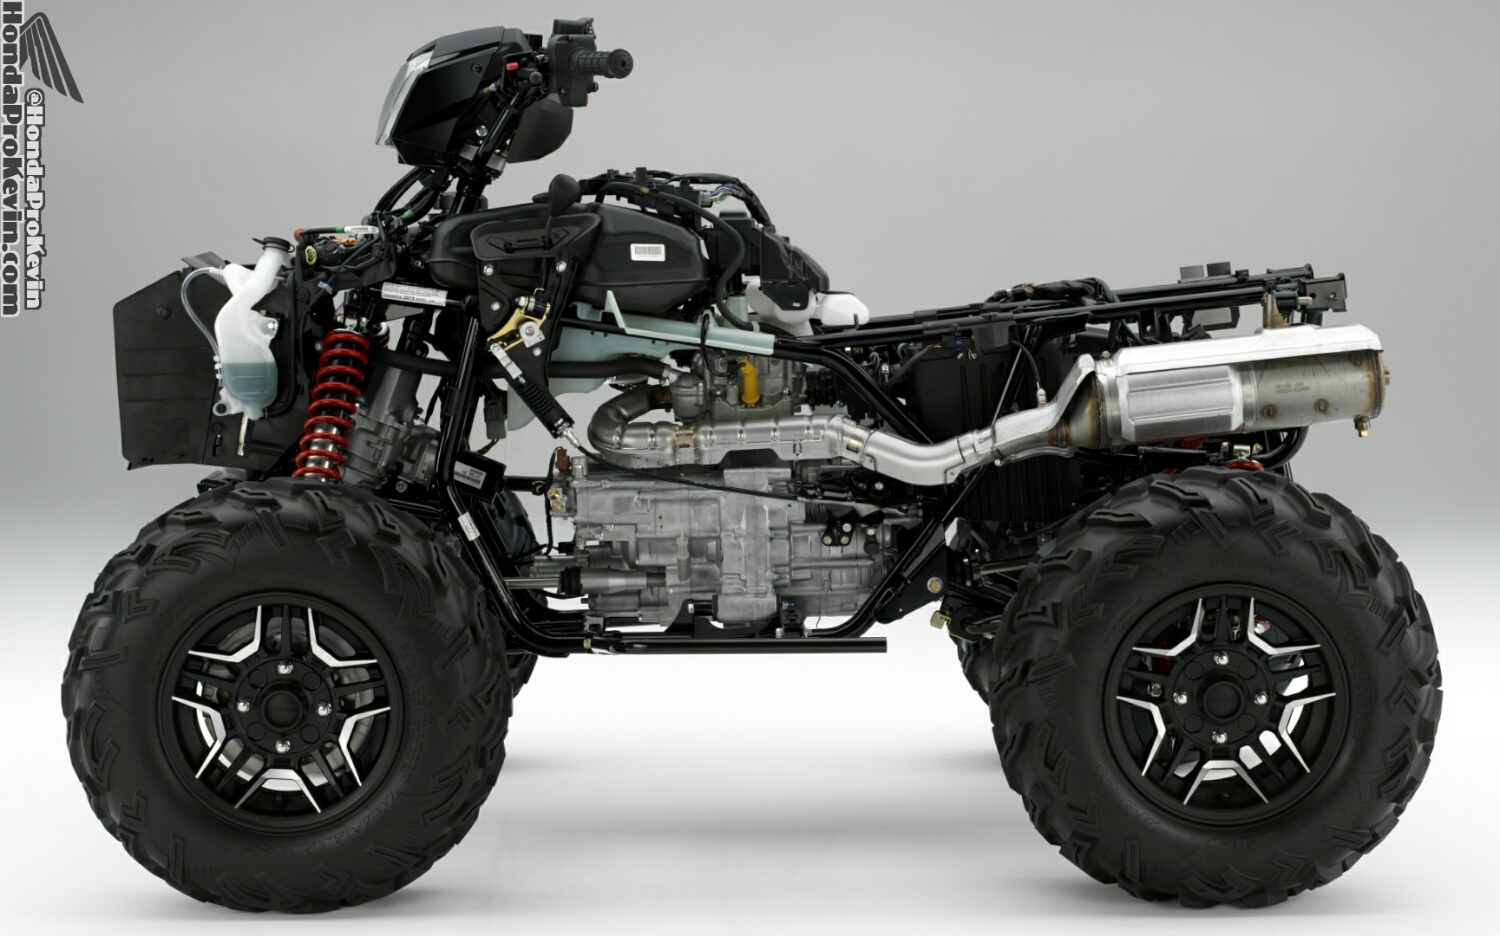 2021 Honda TRX520 Rubicon 520 ATV Review / Specs / Horsepower / Torque Performance Rating